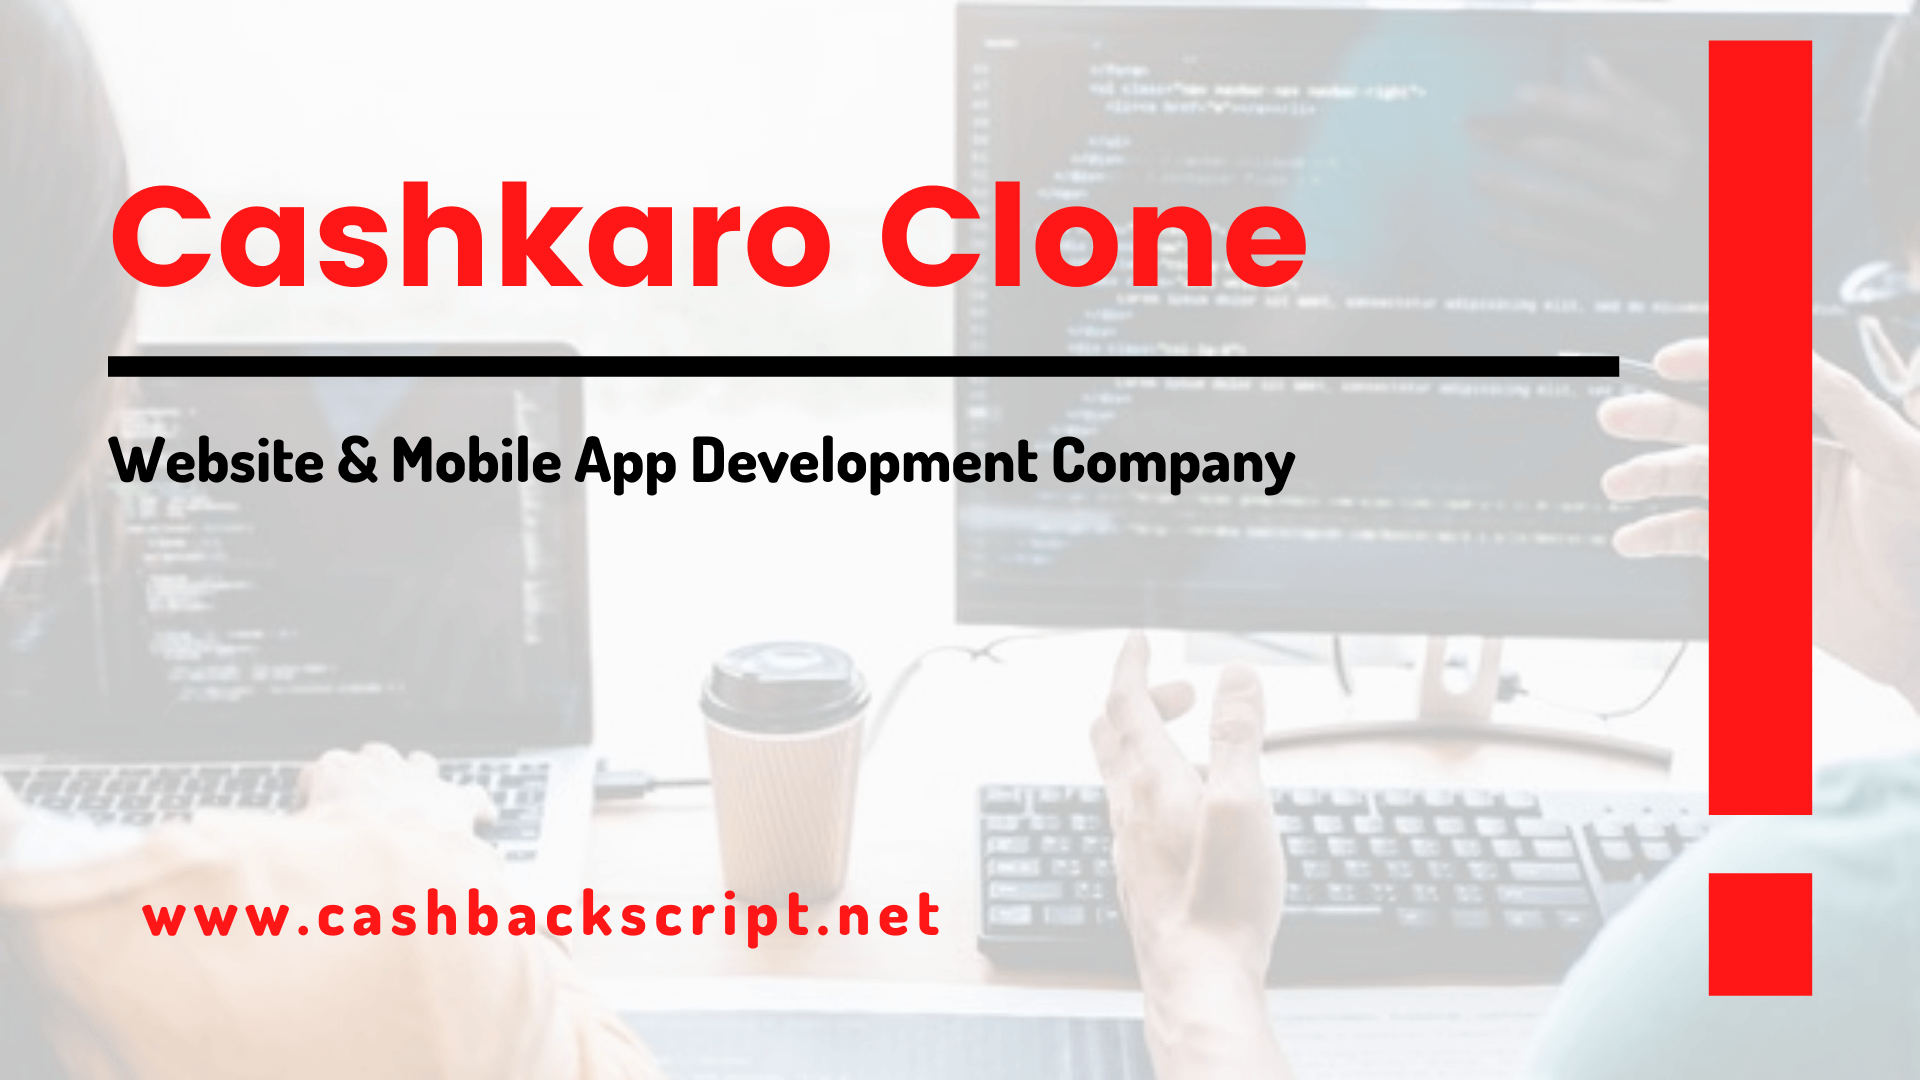 Cashkaro Clone Website & Mobile App Development Company